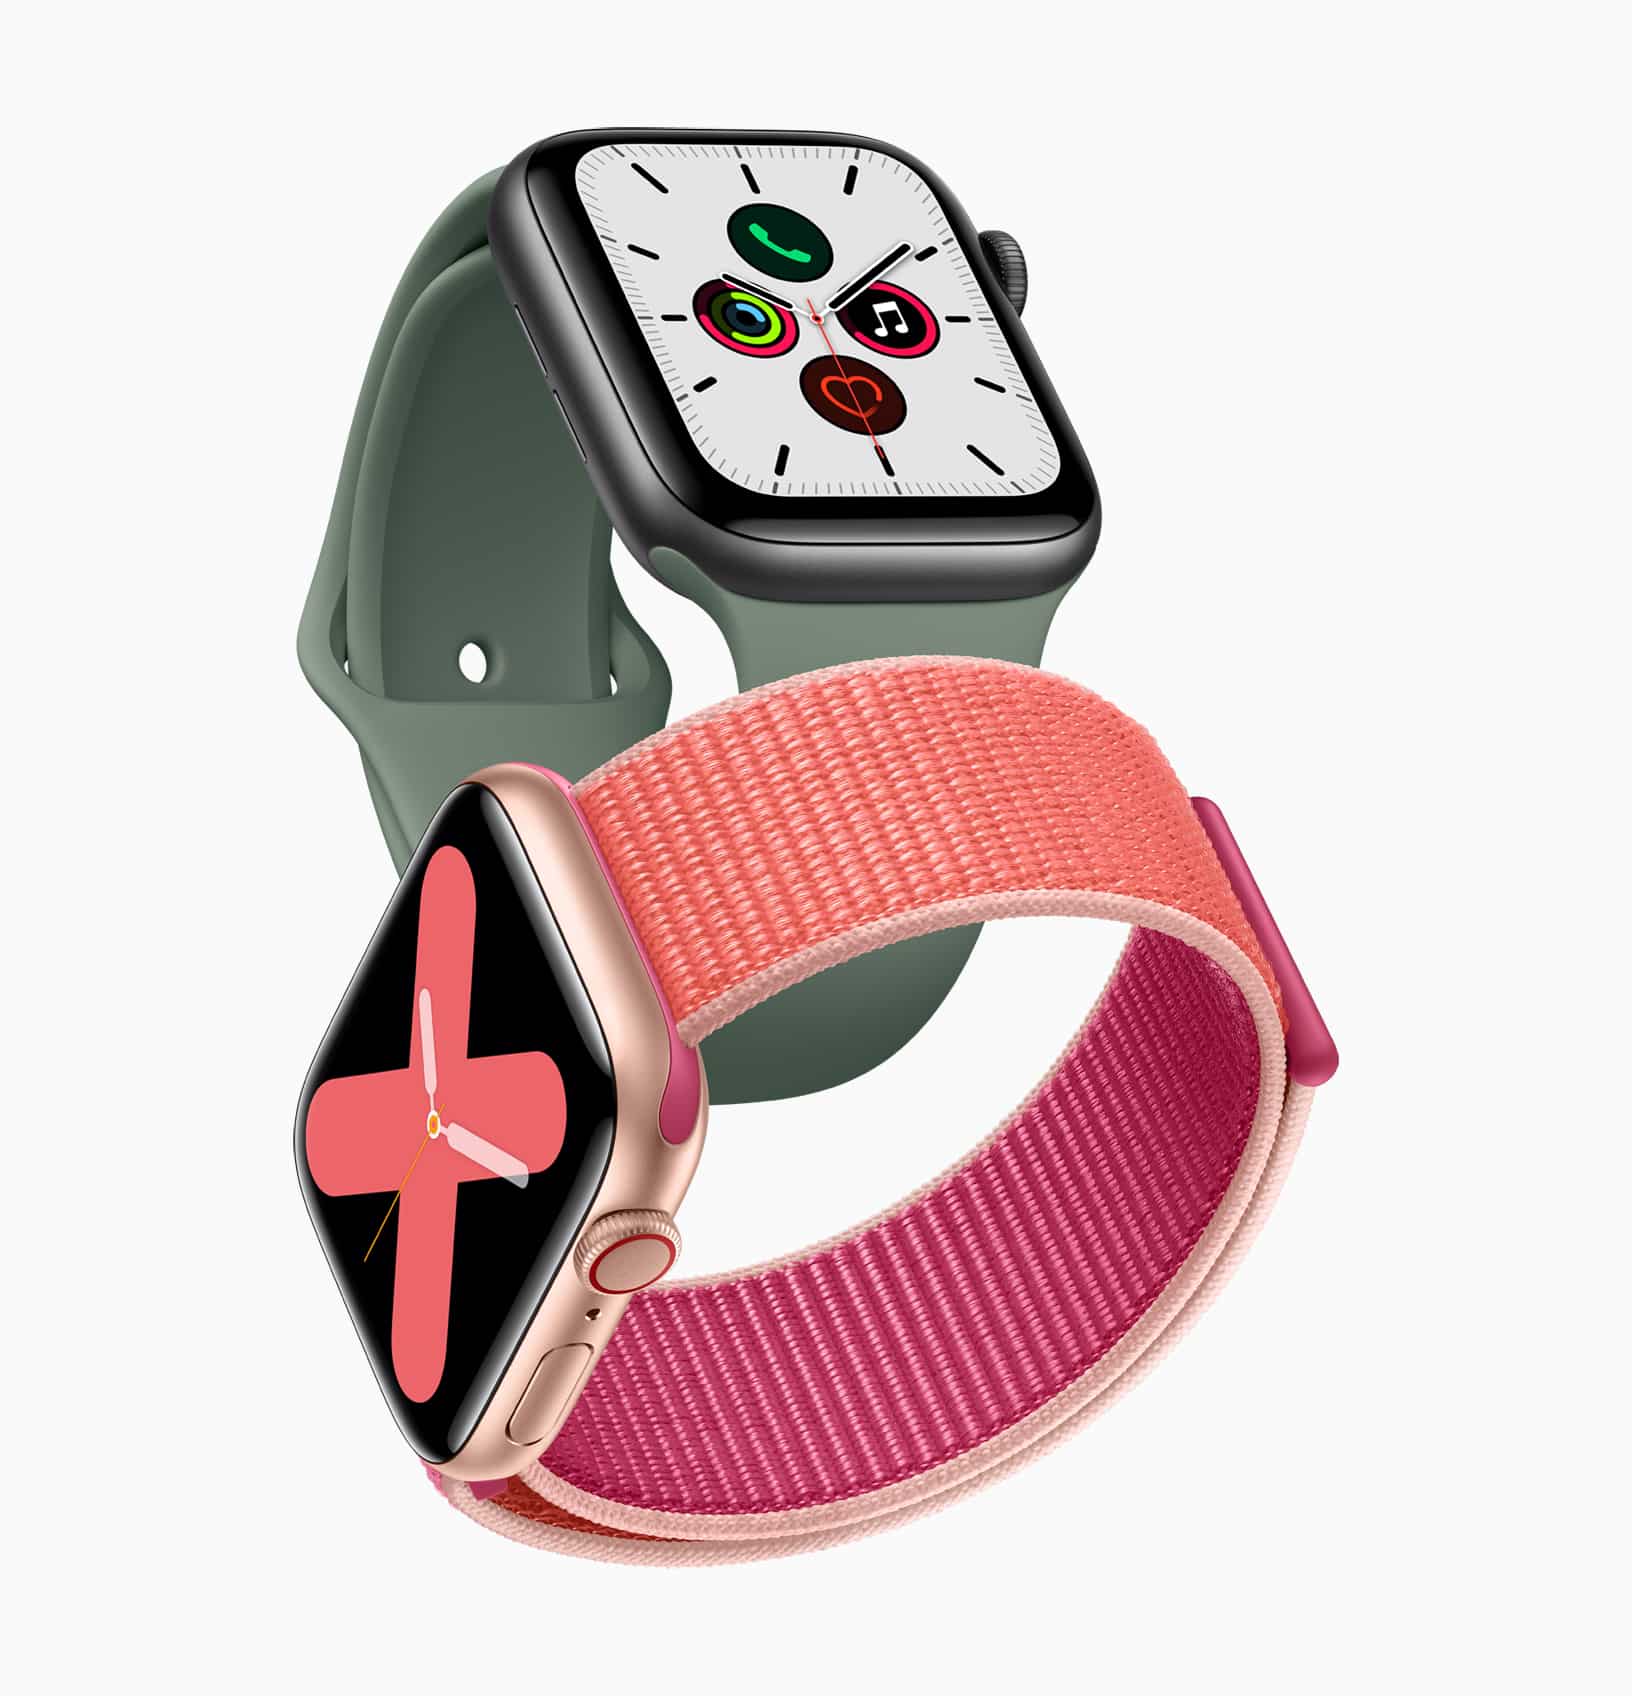 Apple unveils Apple Watch Series 5 with alwayson display